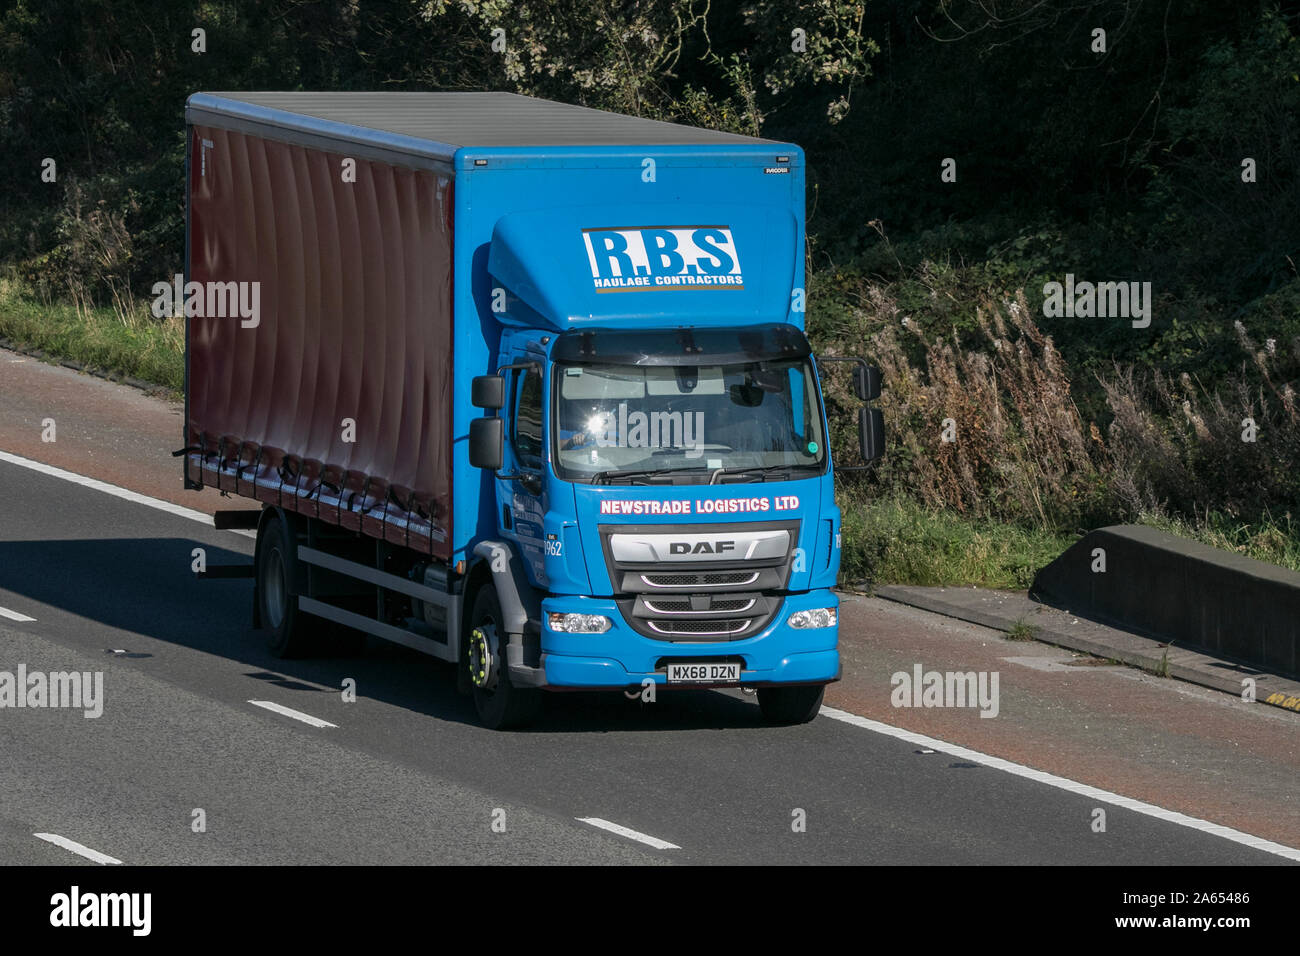 Newstrade logistics Ltd DAF R.B.S haulage contractors traveling on the M6 motorway near Preston in Lancashire, UK Stock Photo